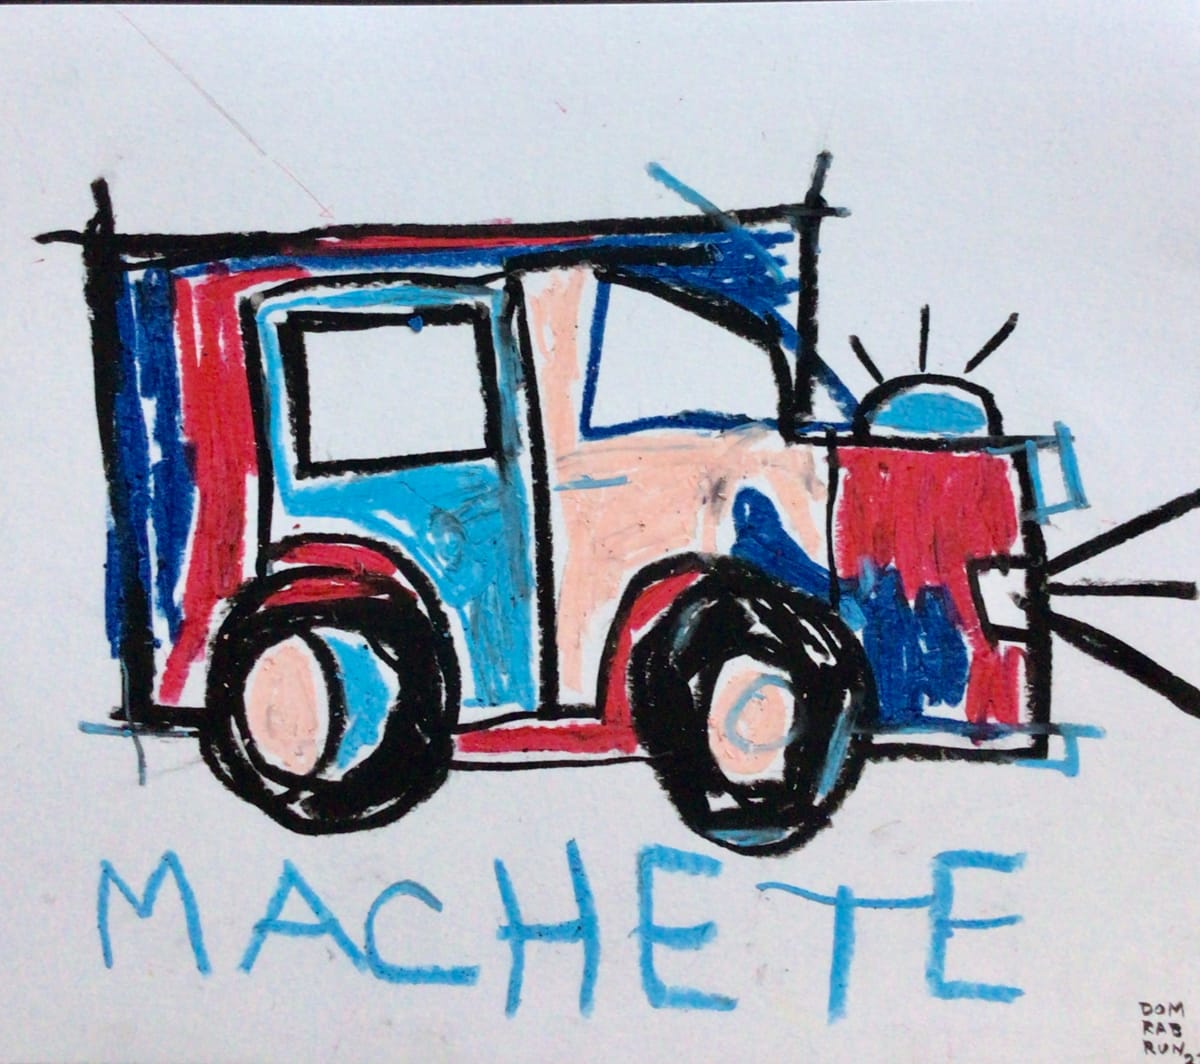 Machete, Mark 2 Vevehicle by Dominick Rabrun 